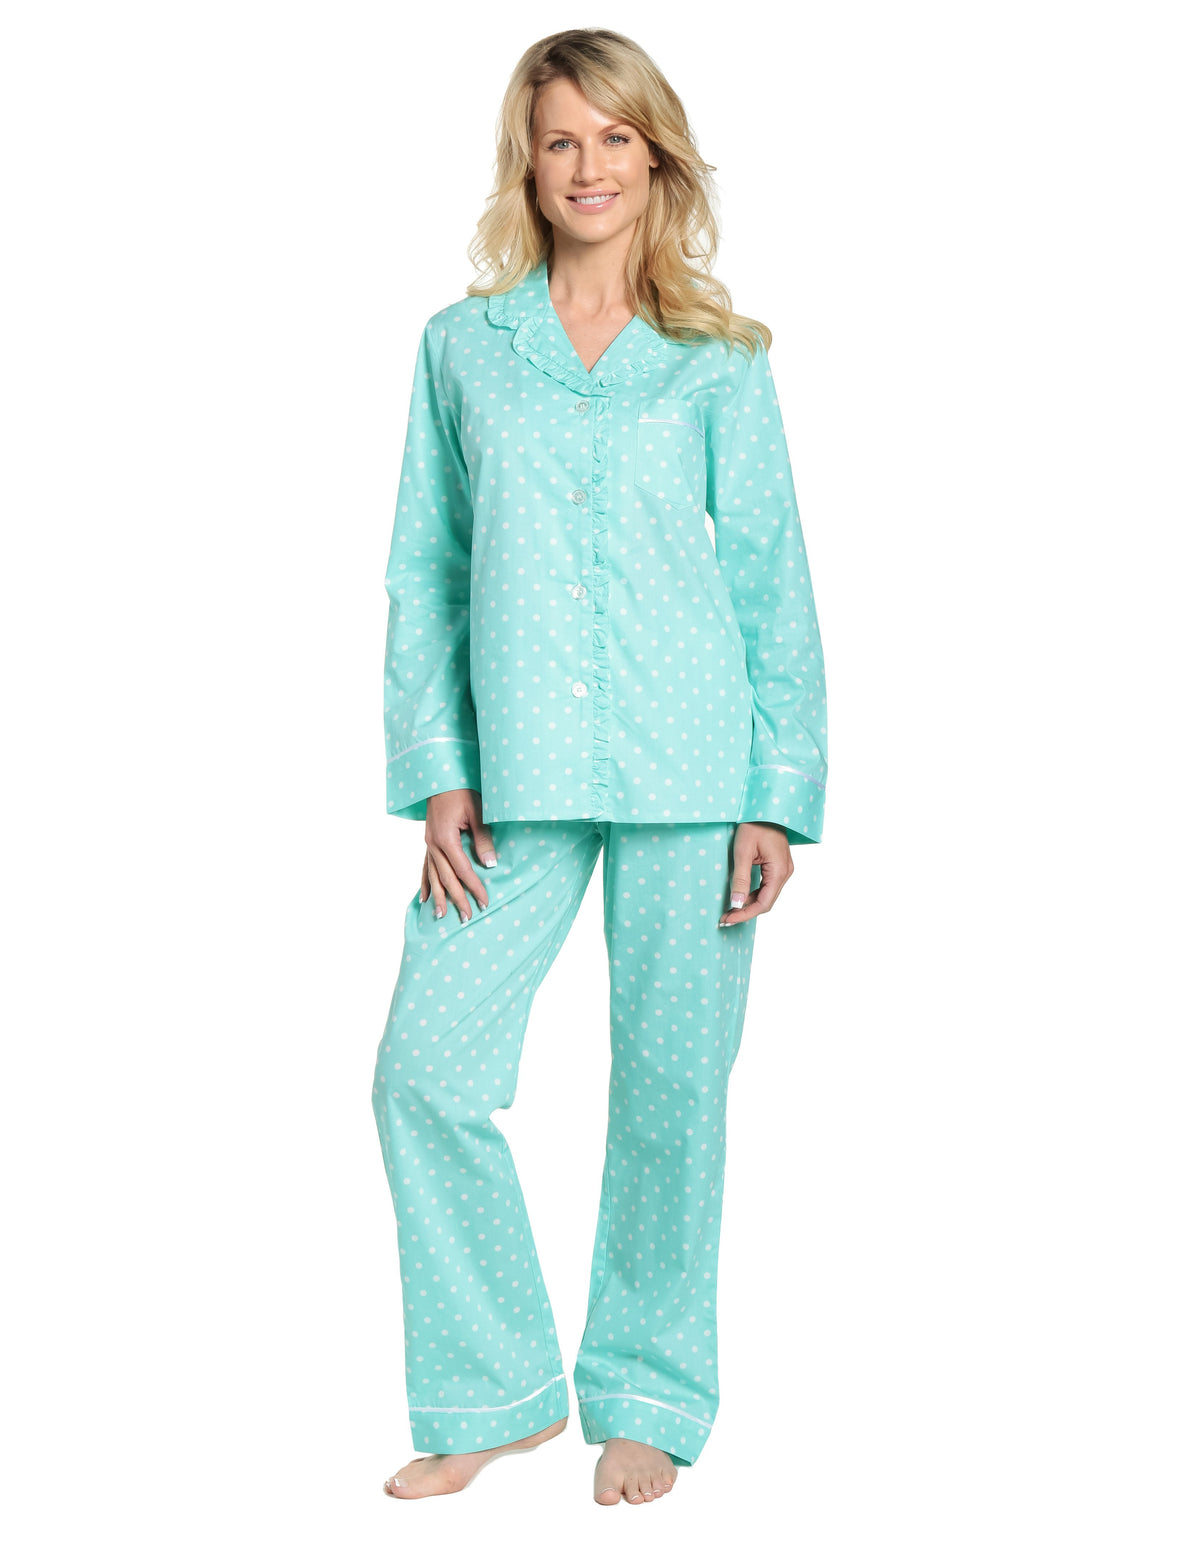 Womens Premium 100% Cotton Poplin Pajama Set with Ruffles - Dots Diva Aqua-White